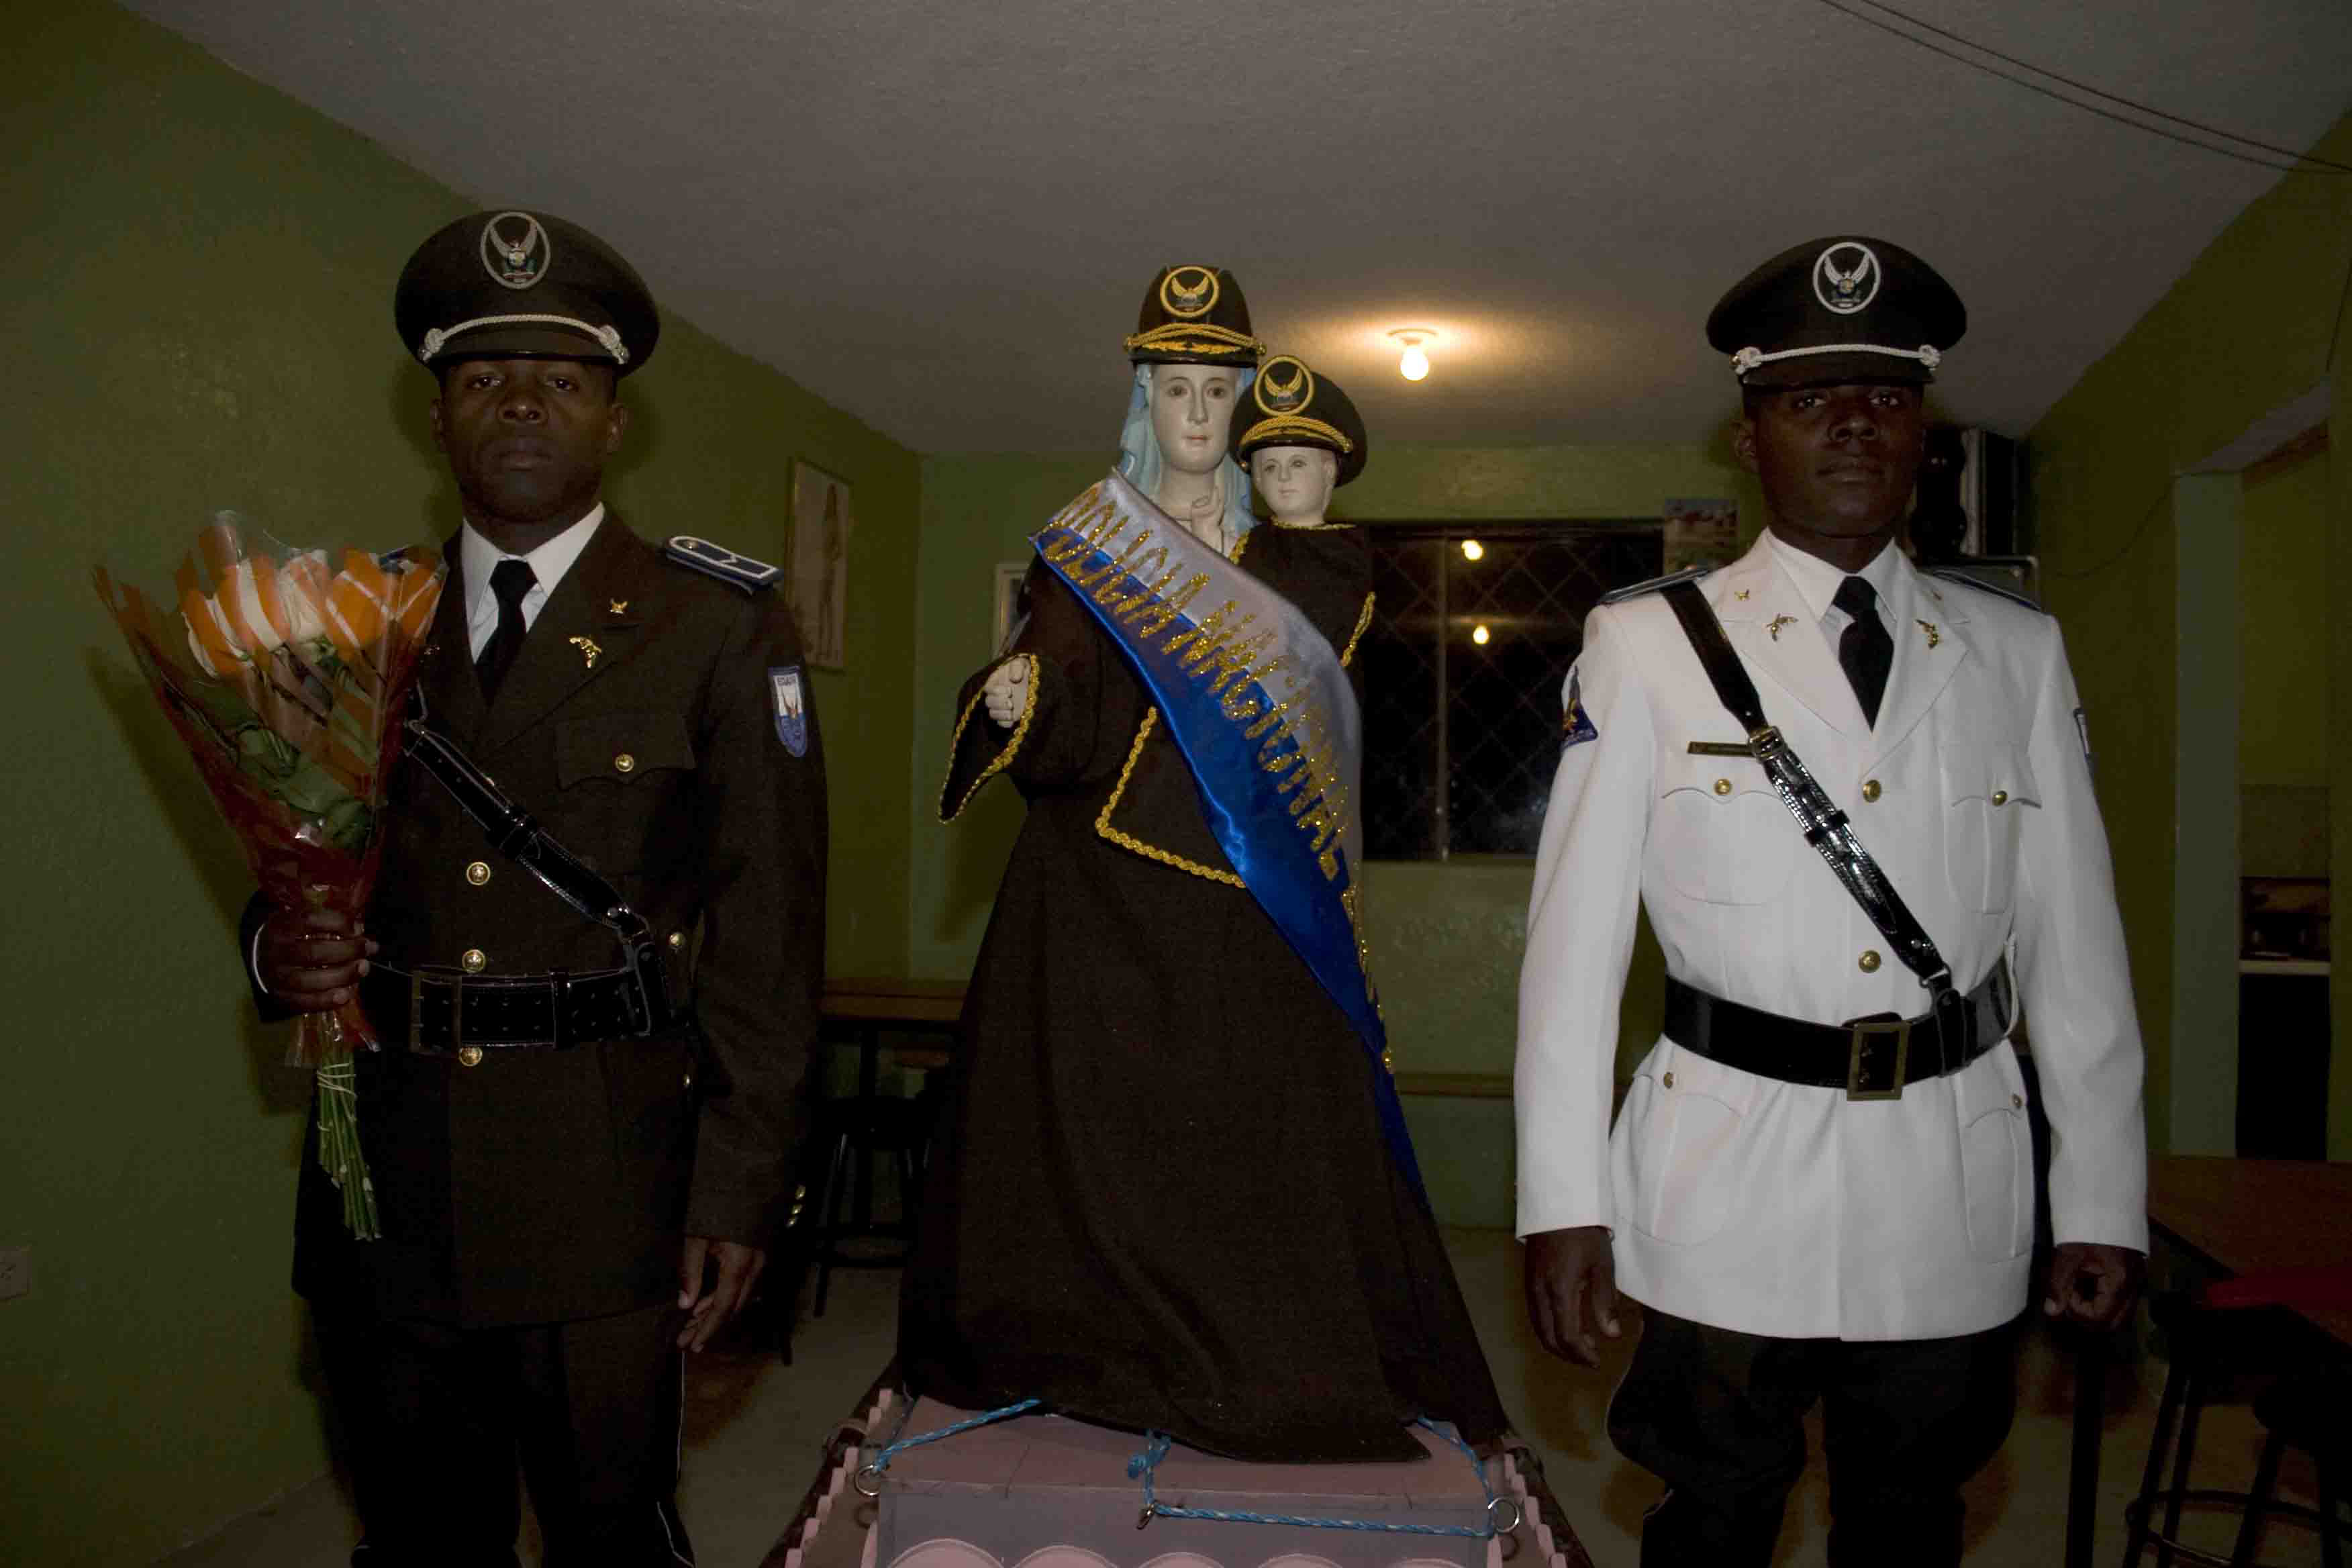 Celebration Virgen de las Nieves-Chota community. Virgen de las Nieves dressed as a police officer. 